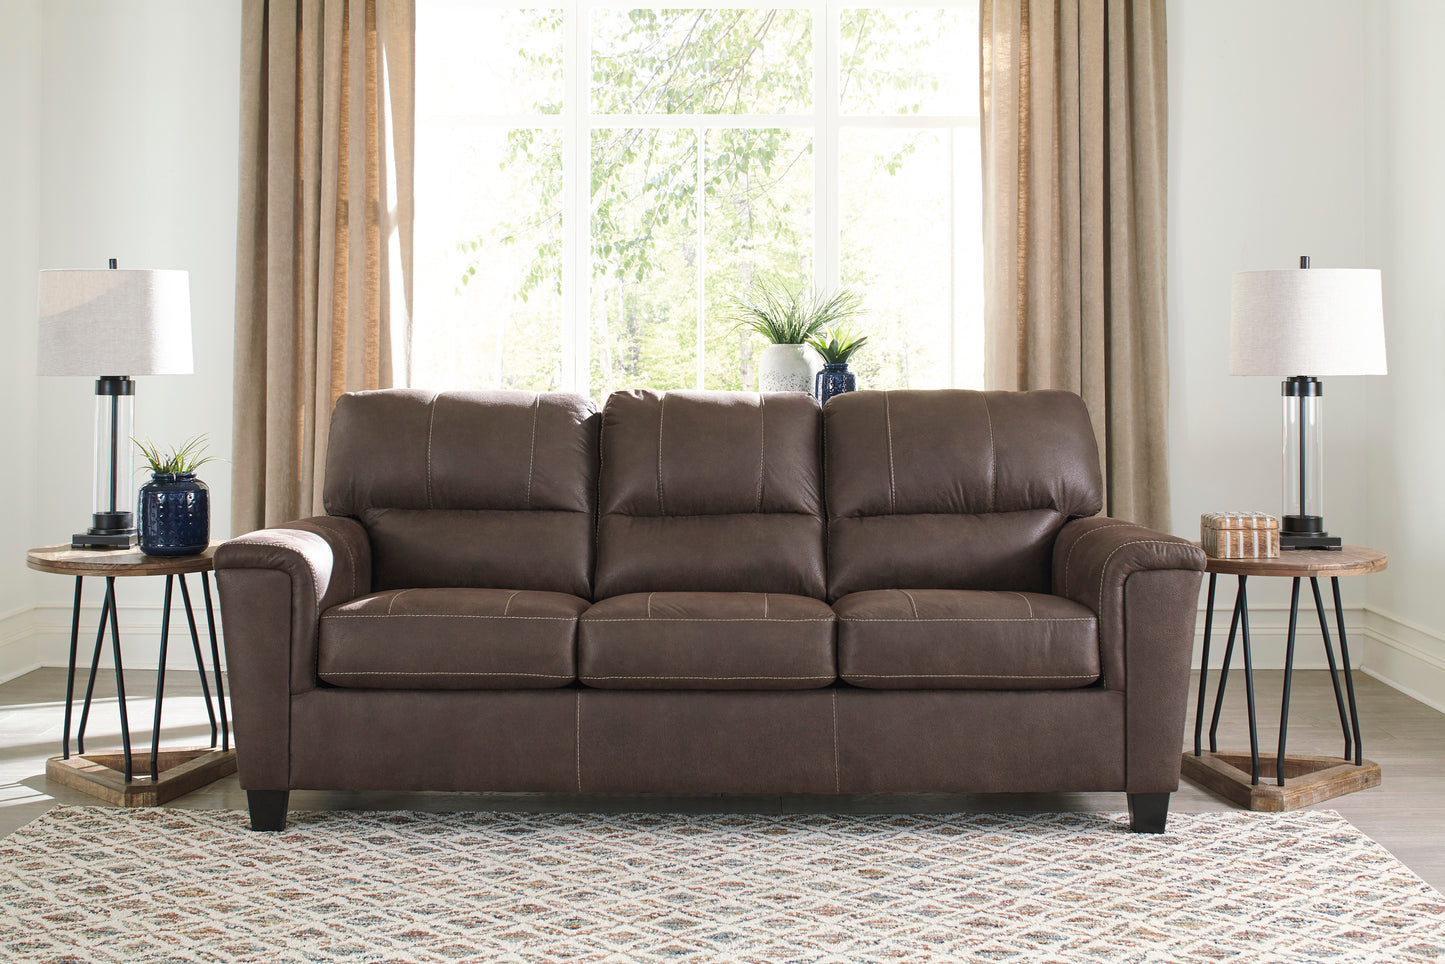 Navi Faux Leather Sofa - Chestnut - Furniture Depot